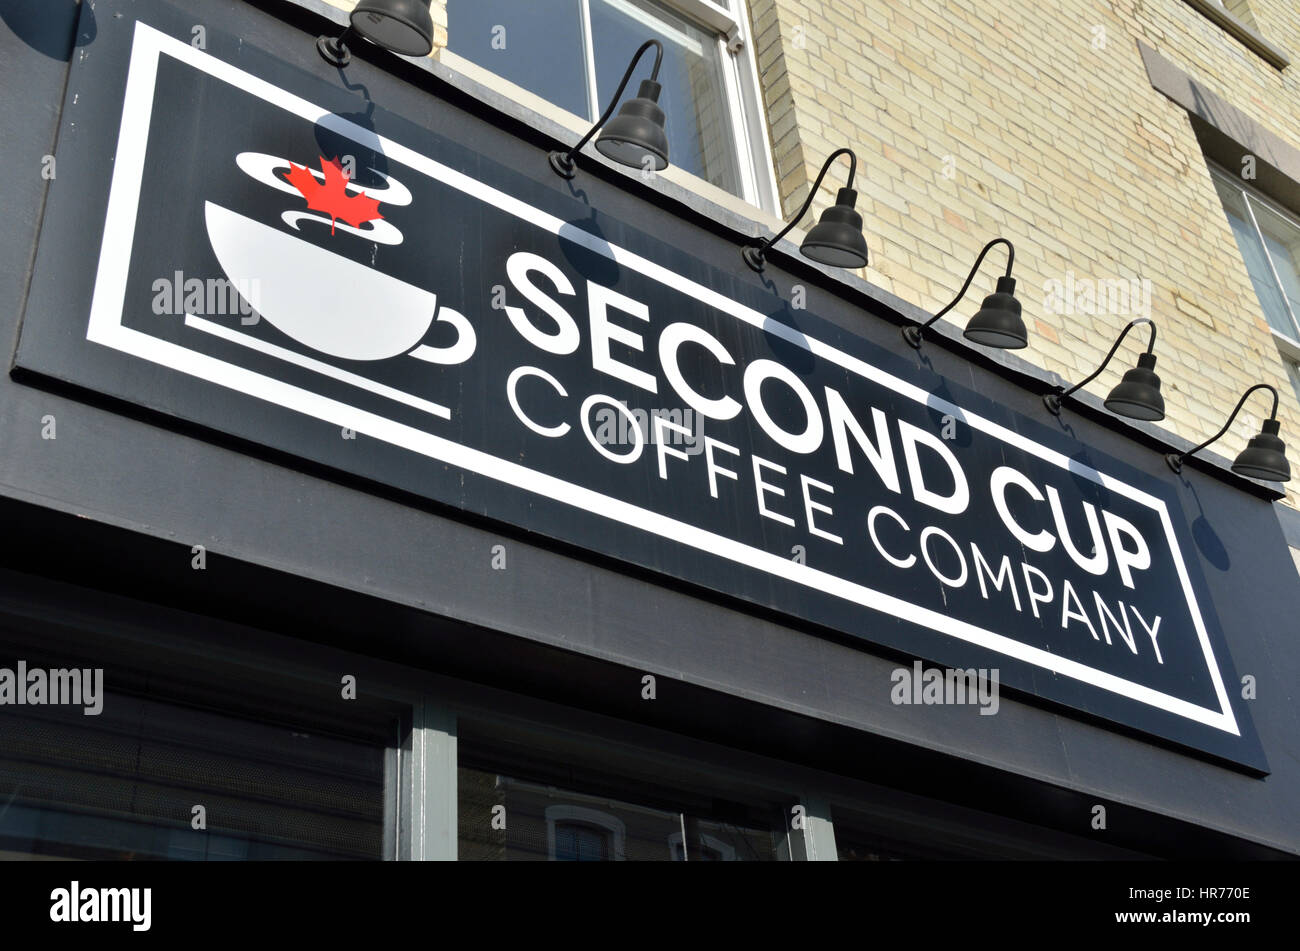 https://c8.alamy.com/comp/HR770E/second-cup-coffee-company-cafe-in-portobello-roadlondon-uk-HR770E.jpg